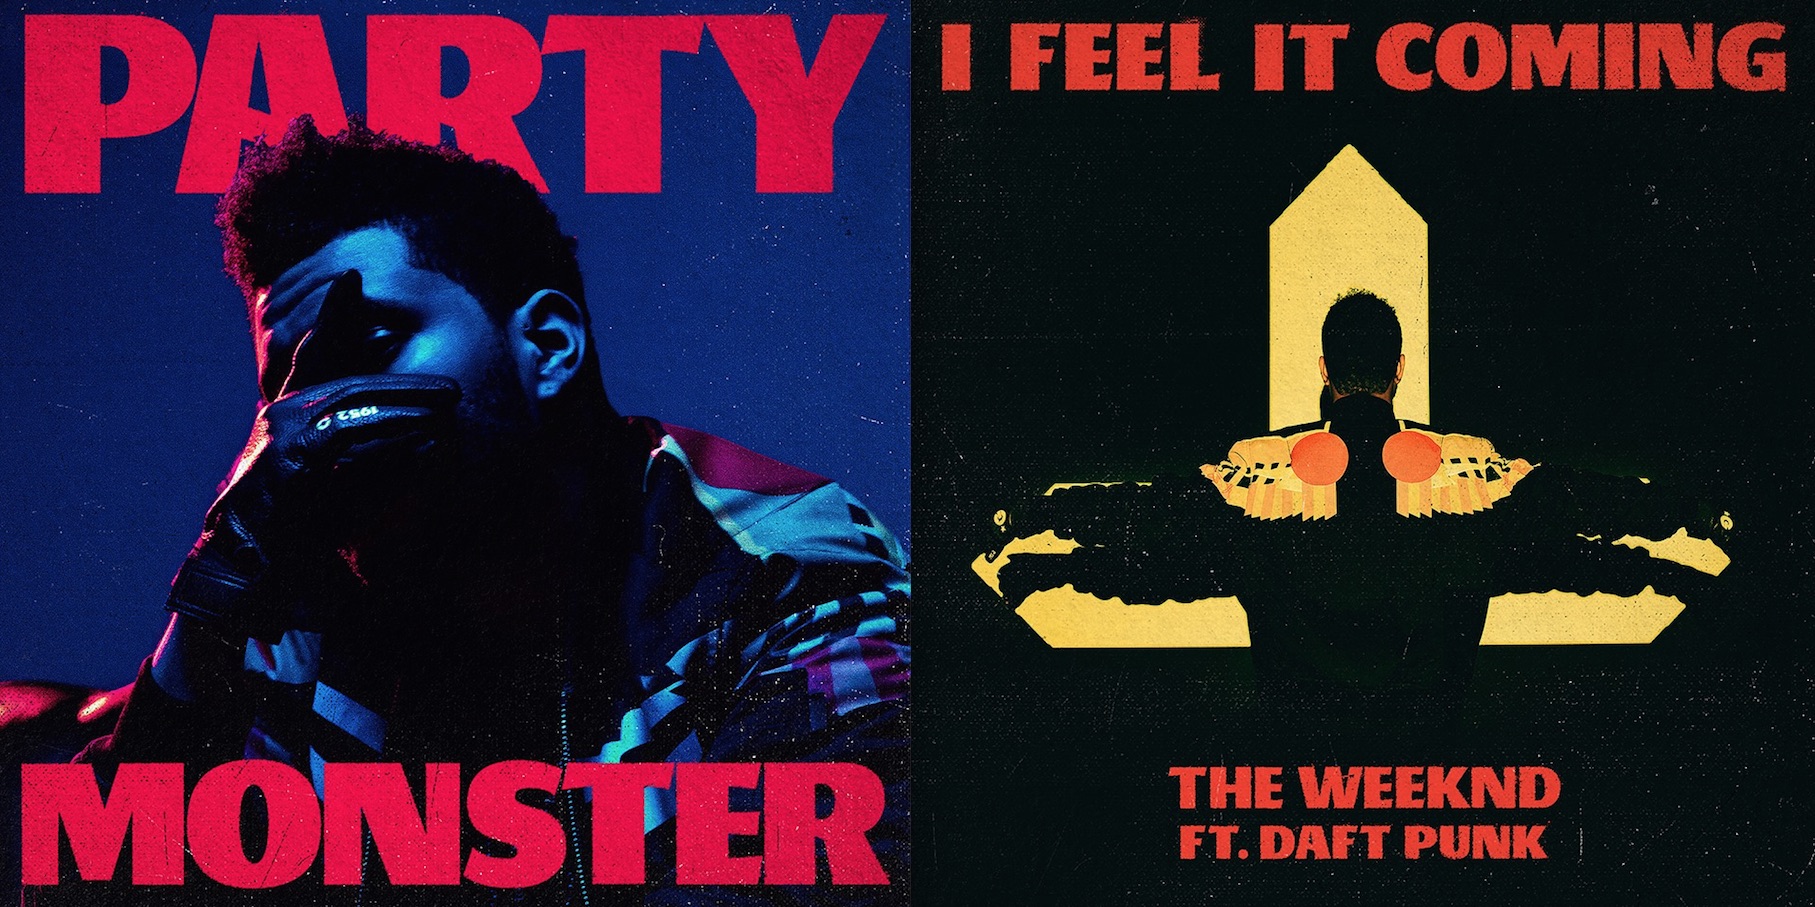 Песня feeling coming. The Weeknd Daft Punk i feel it coming. Weeknd feel it coming. The Weeknd плакат. Party Monster the Weeknd обложка.